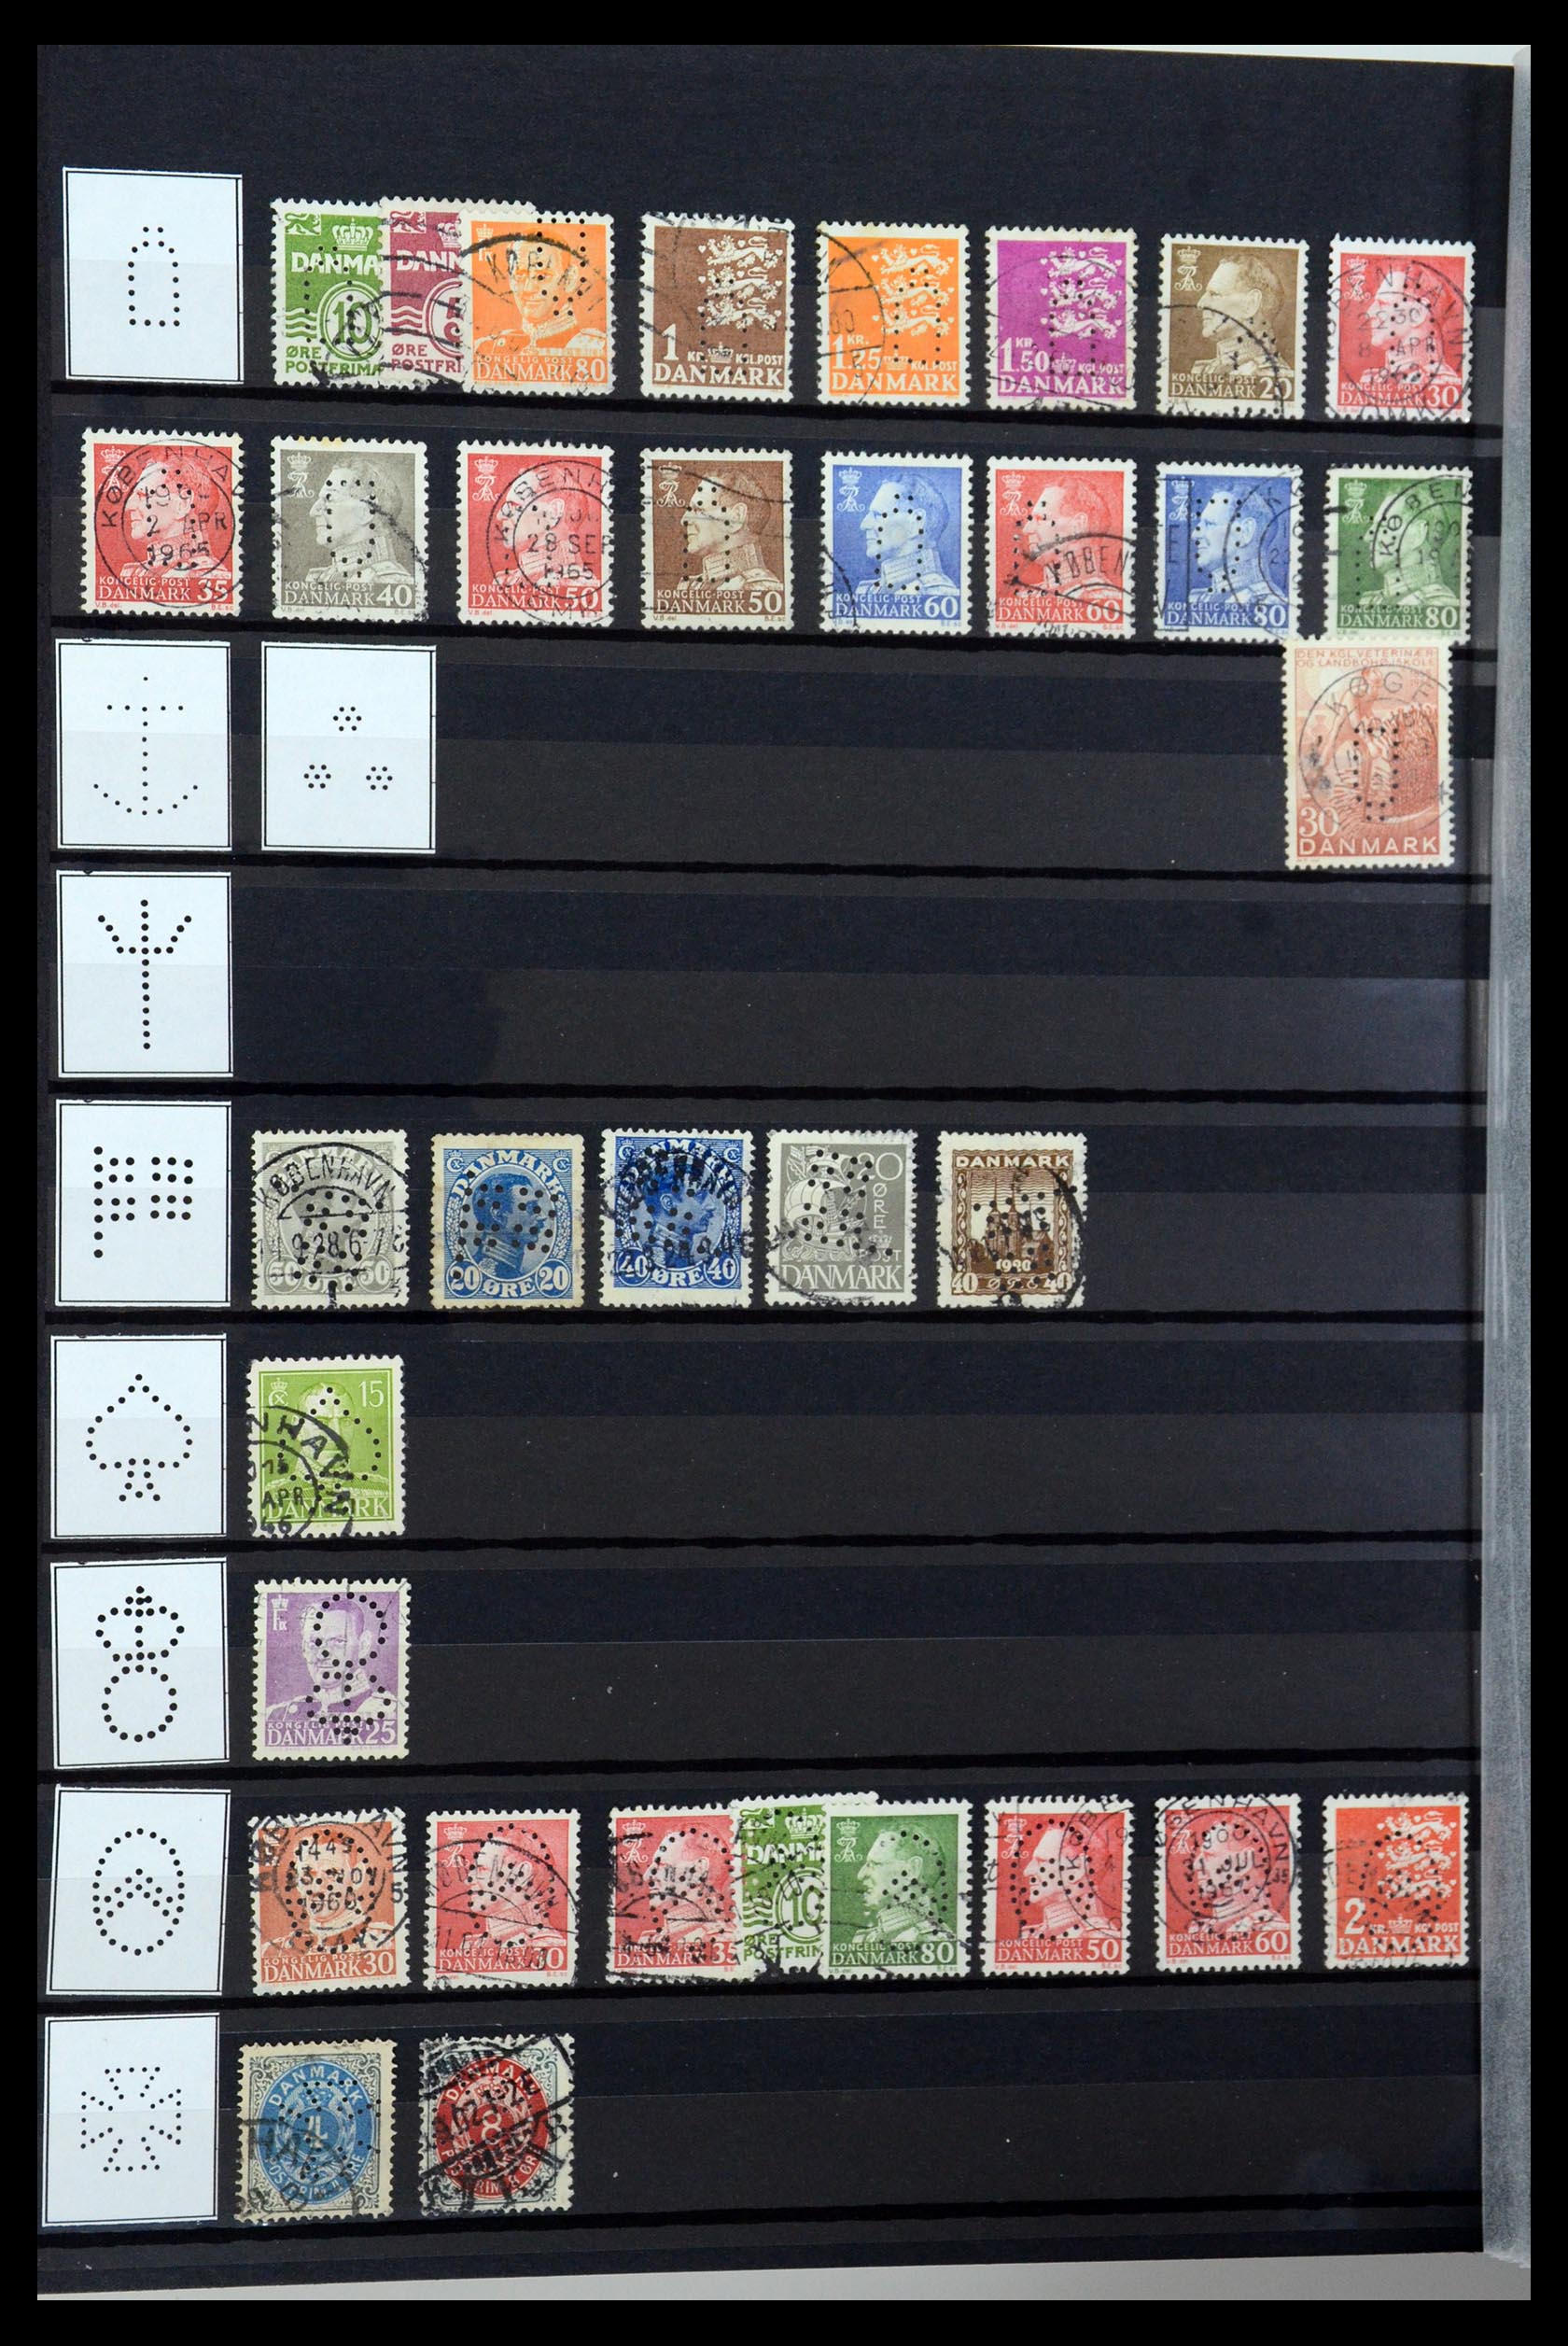 36396 234 - Stamp collection 36396 Denmark perfins.